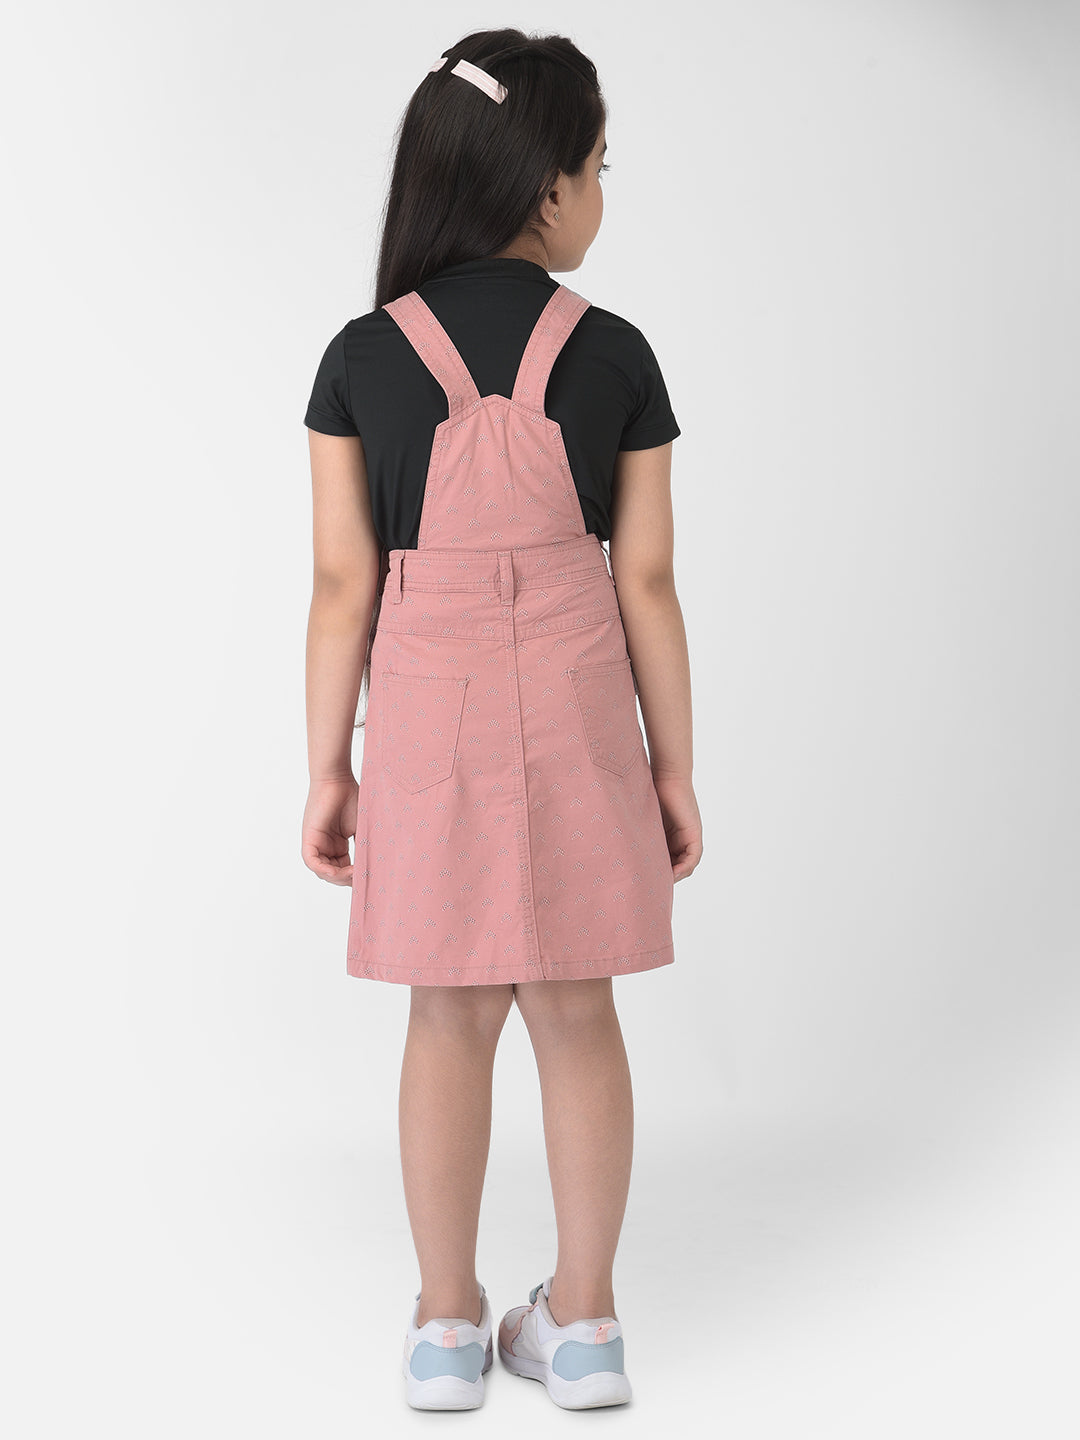 Pink Pinafore Dress - Girls Dress